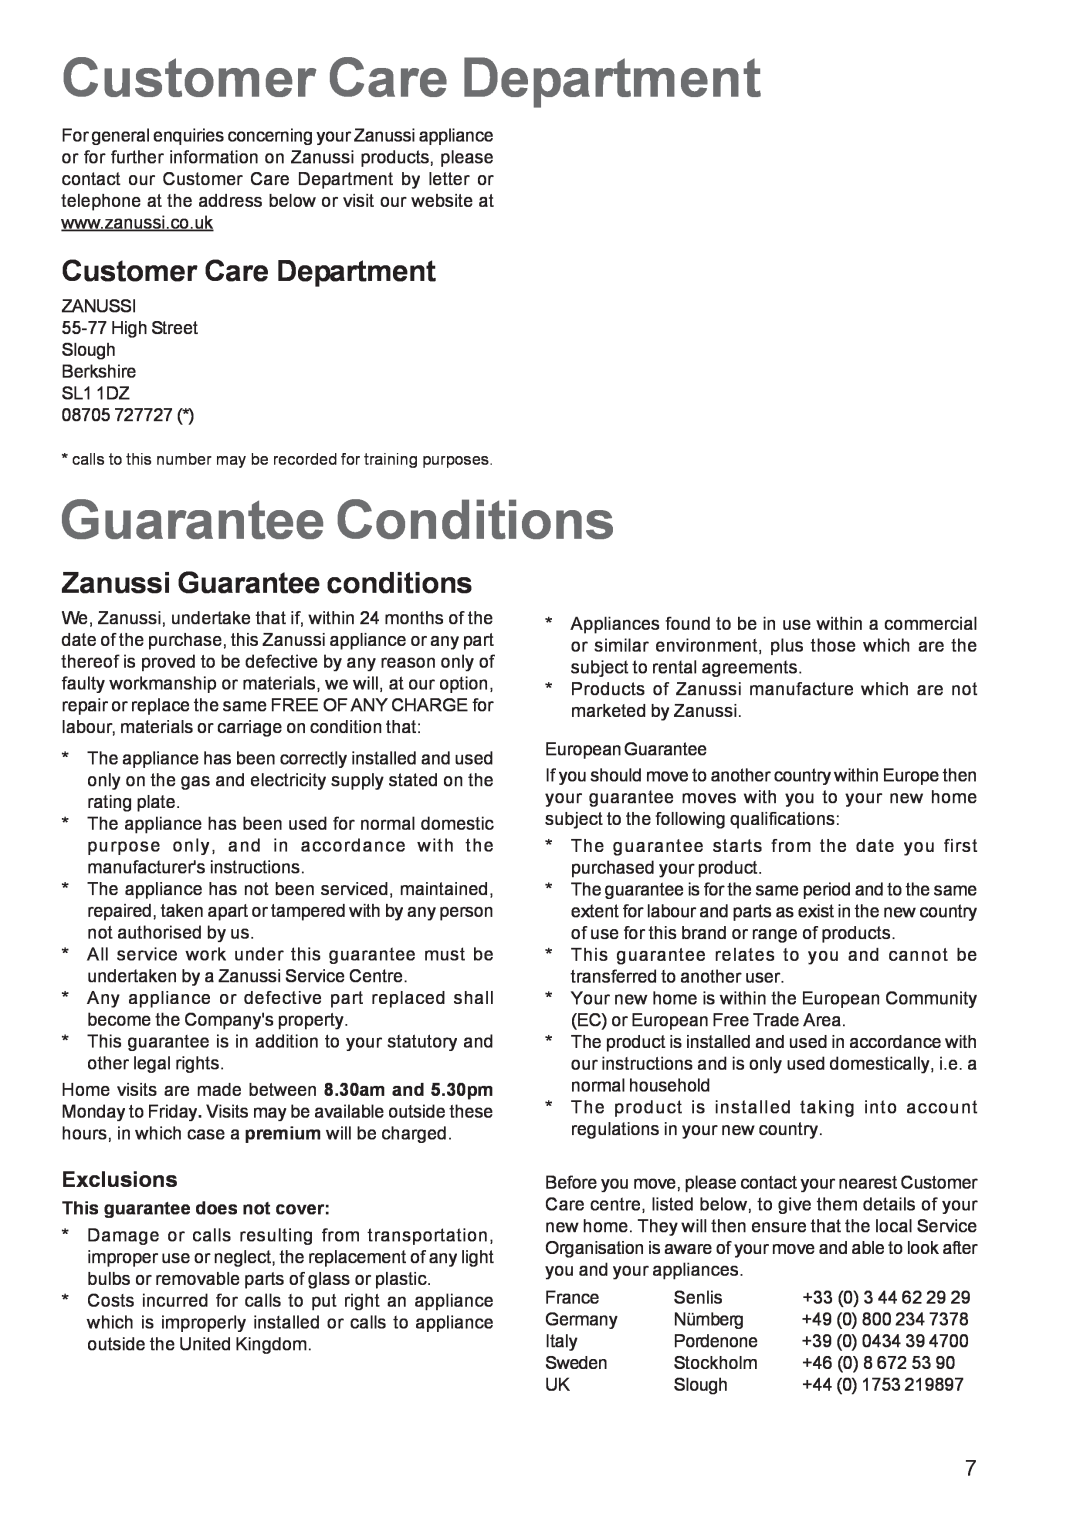 Zanussi ZGL 62 manual Customer Care Department, Guarantee Conditions, Zanussi Guarantee conditions, Exclusions 